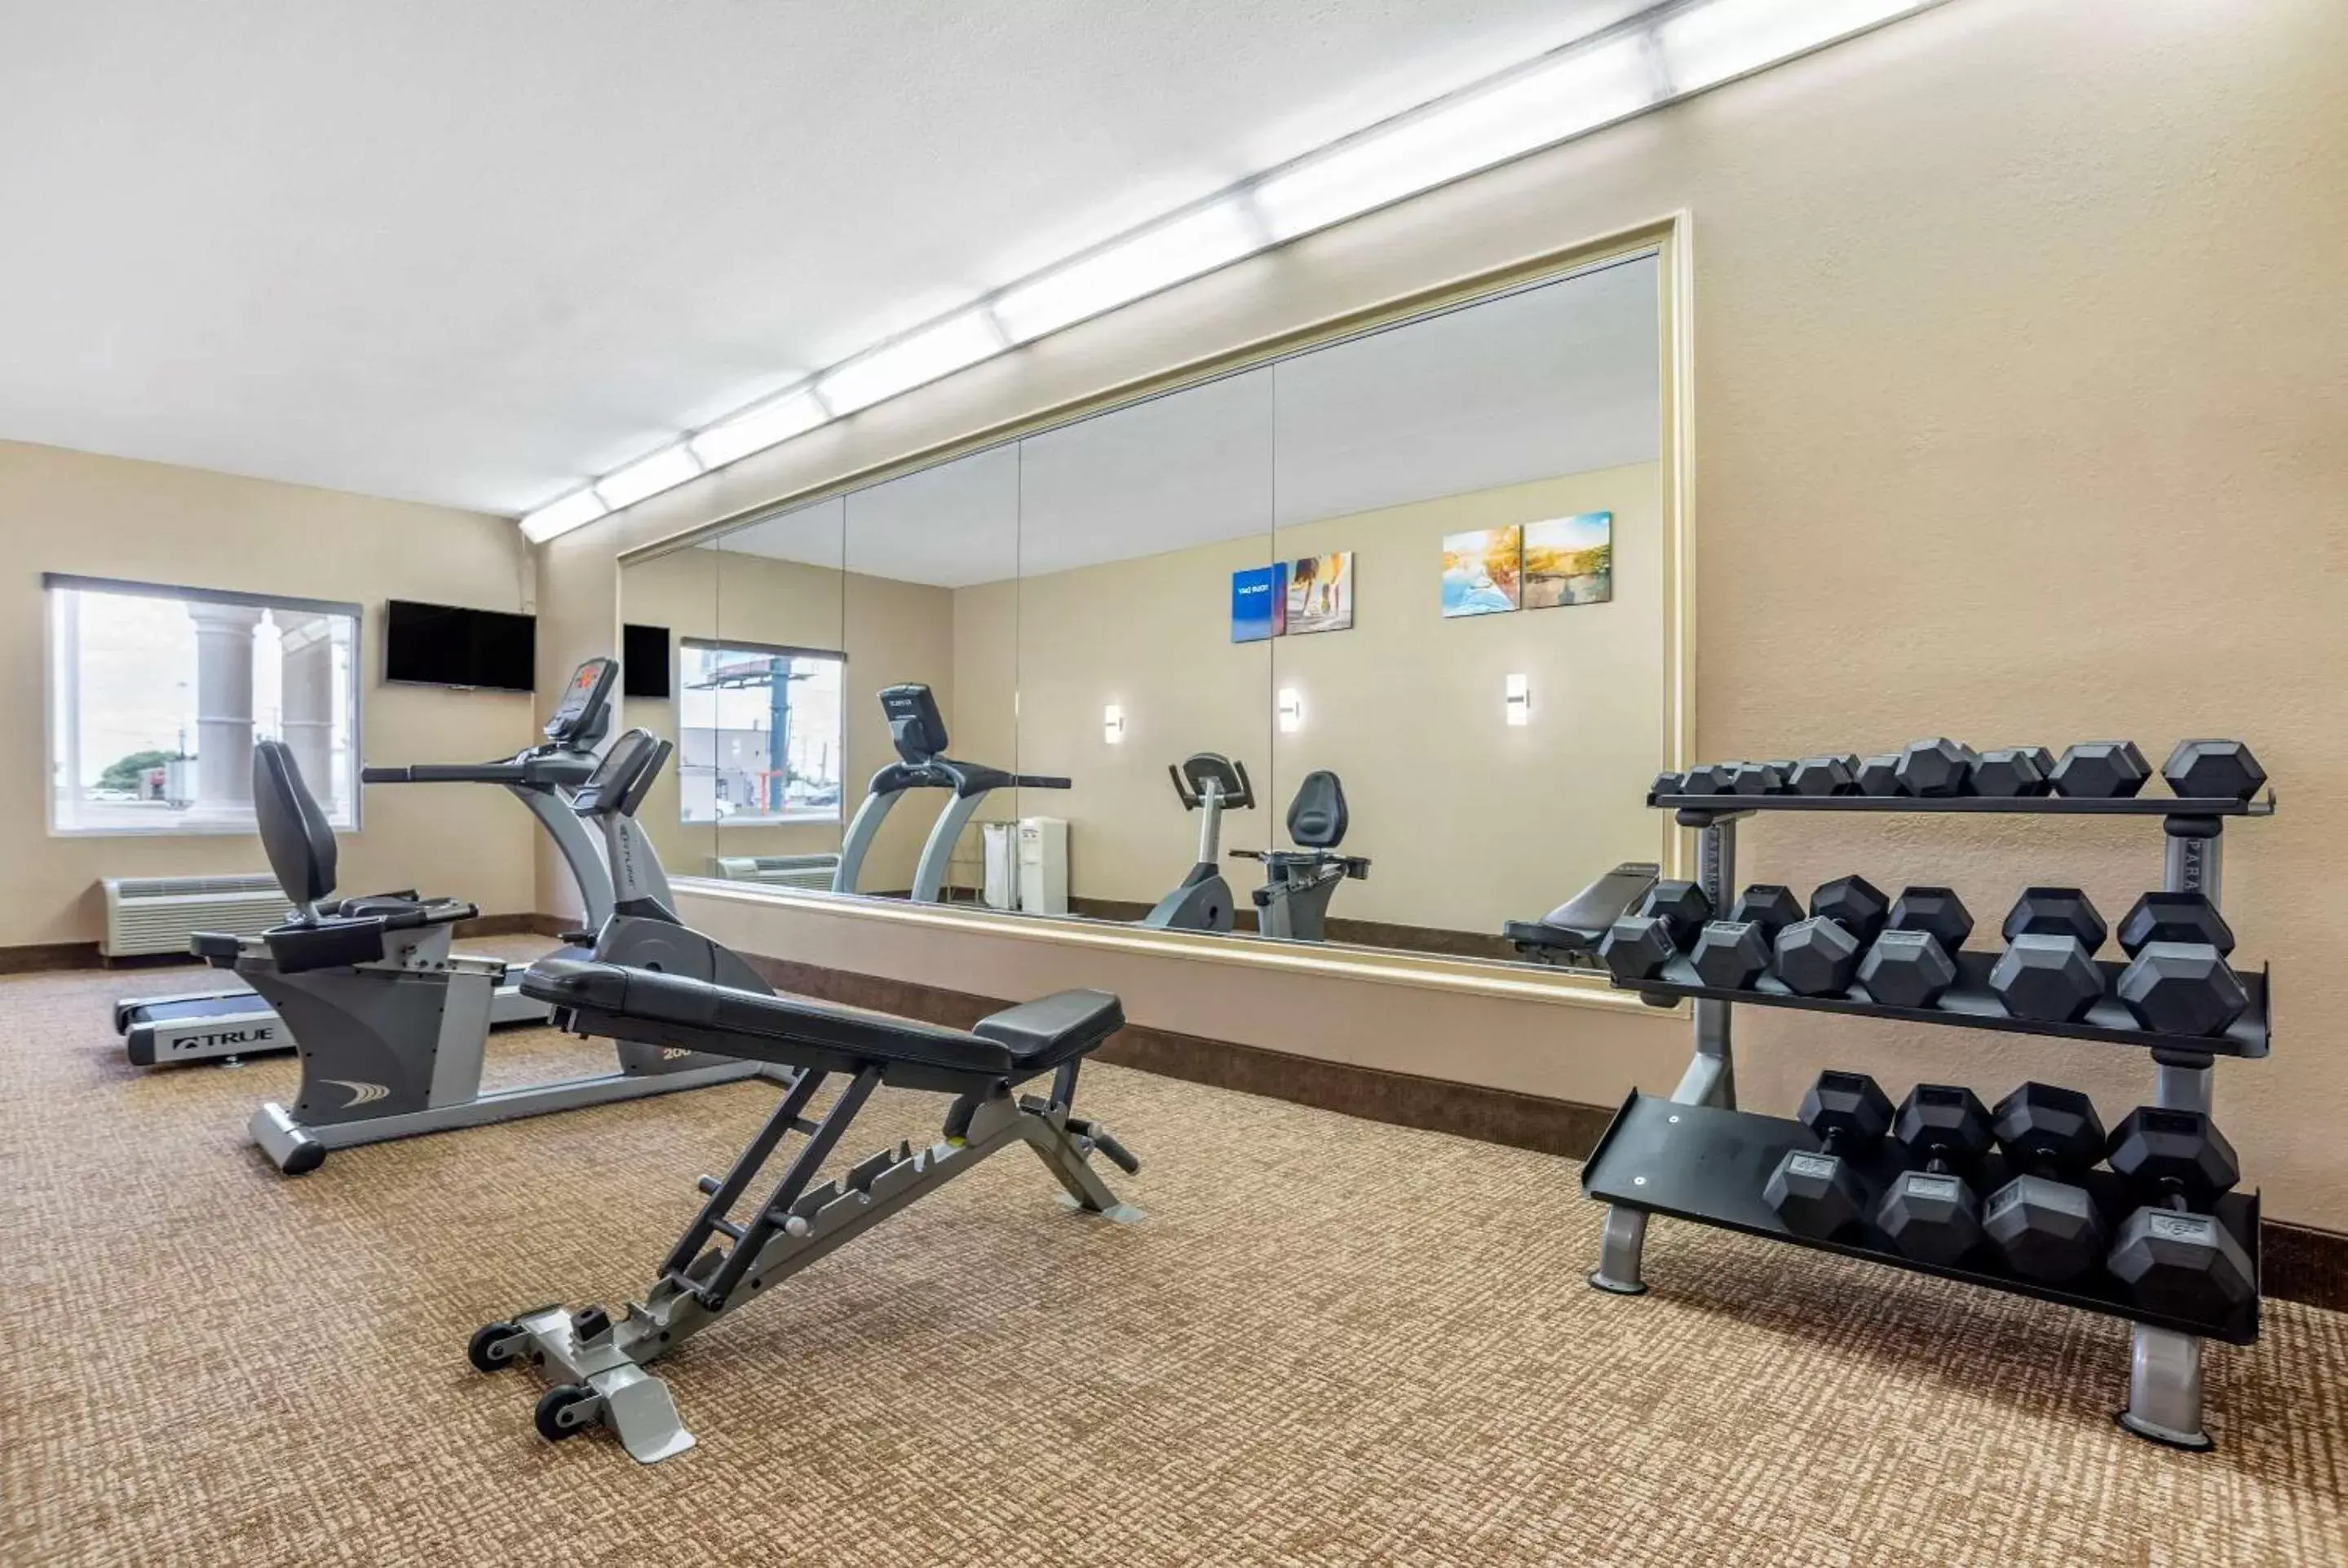 Fitness centre/facilities, Fitness Center/Facilities in Comfort Inn & Suites Marianna I-10